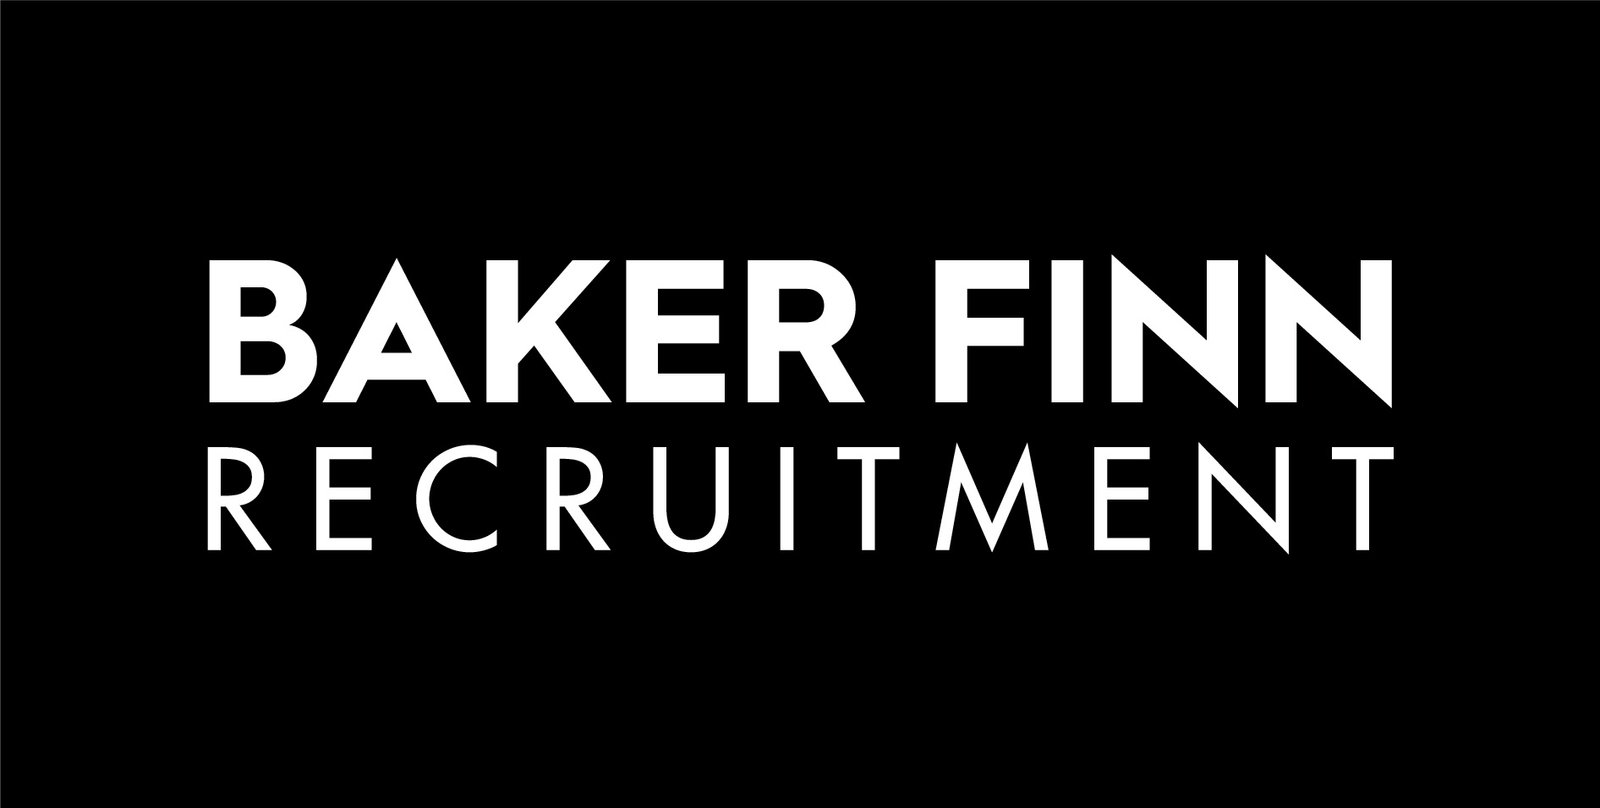 Baker Finn Recruitment